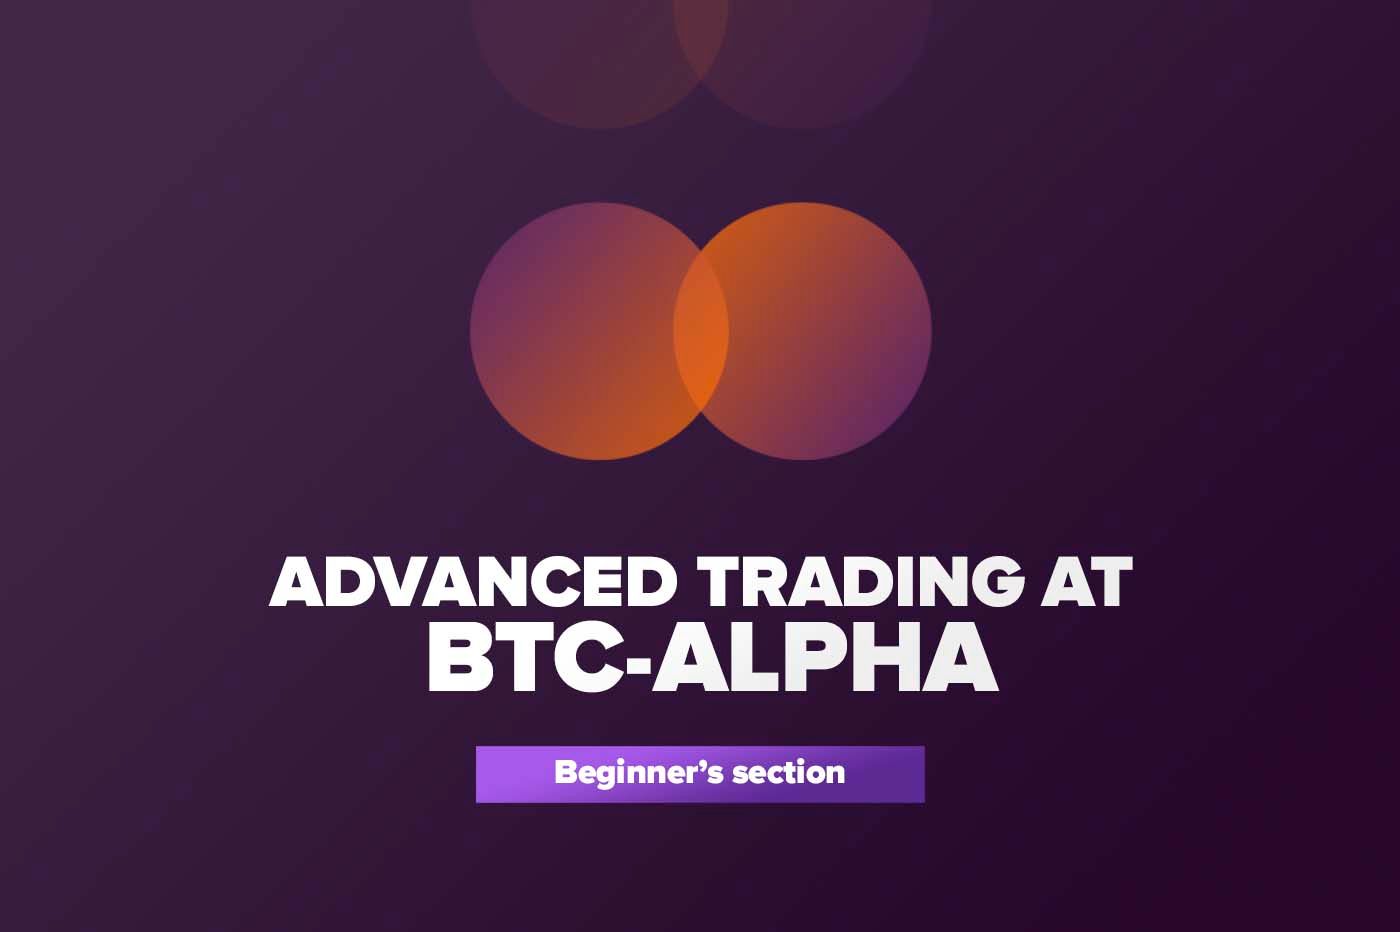 Advanced Trading at BTC-Alpha